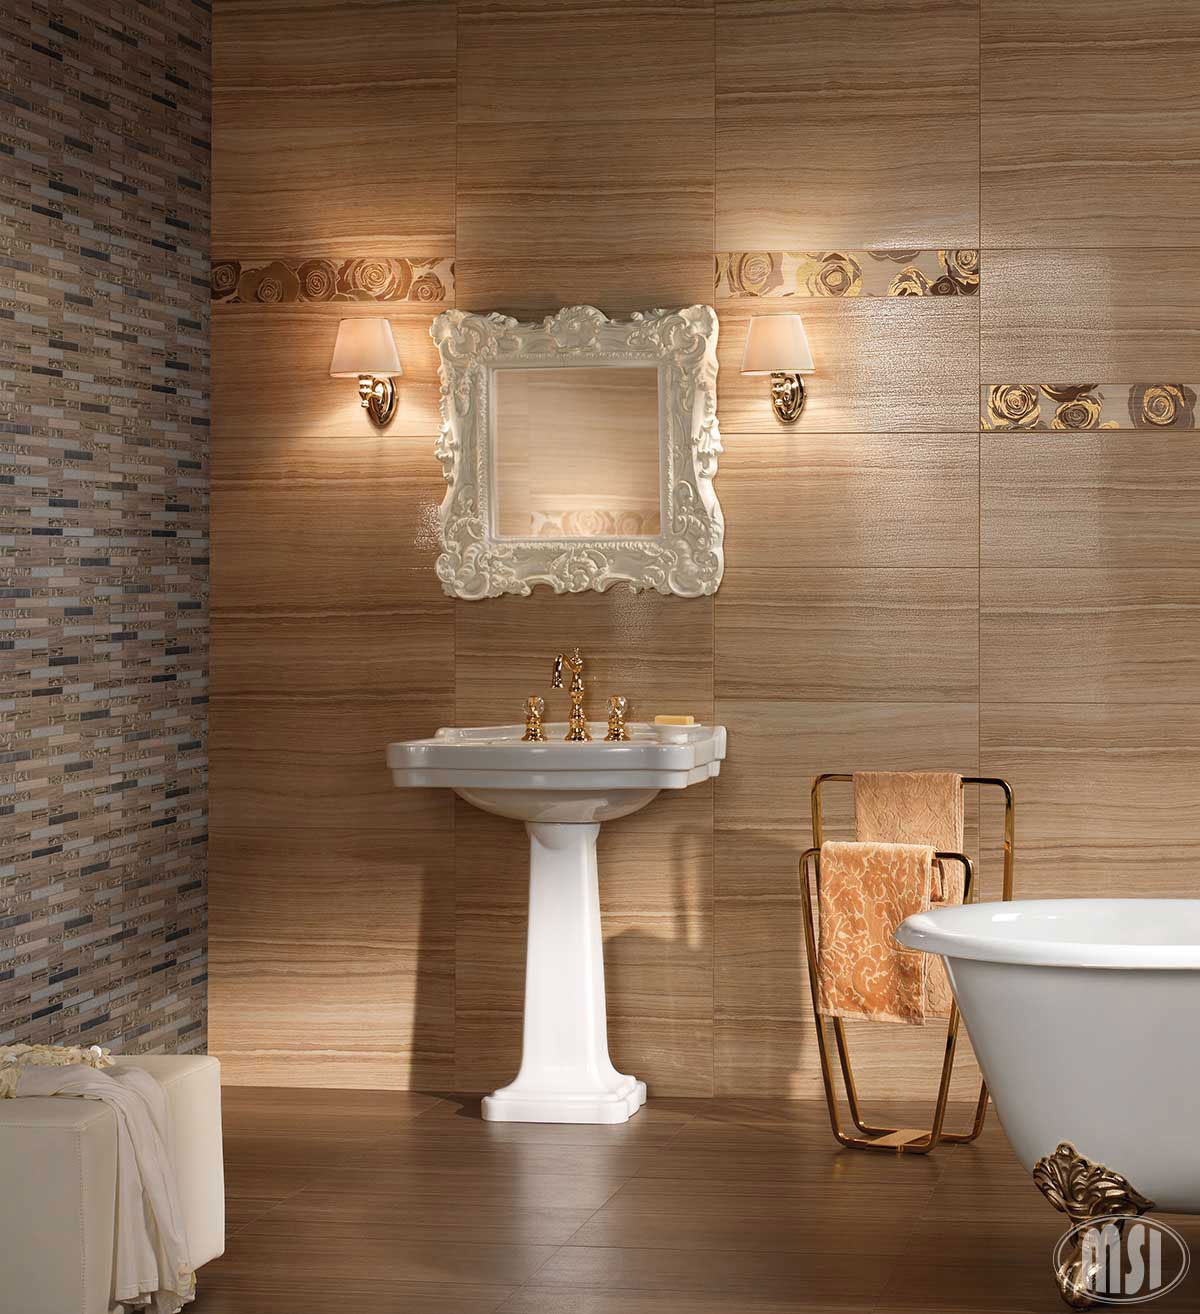 Diamante Brick Glass & Metal Tile wall in bathroom